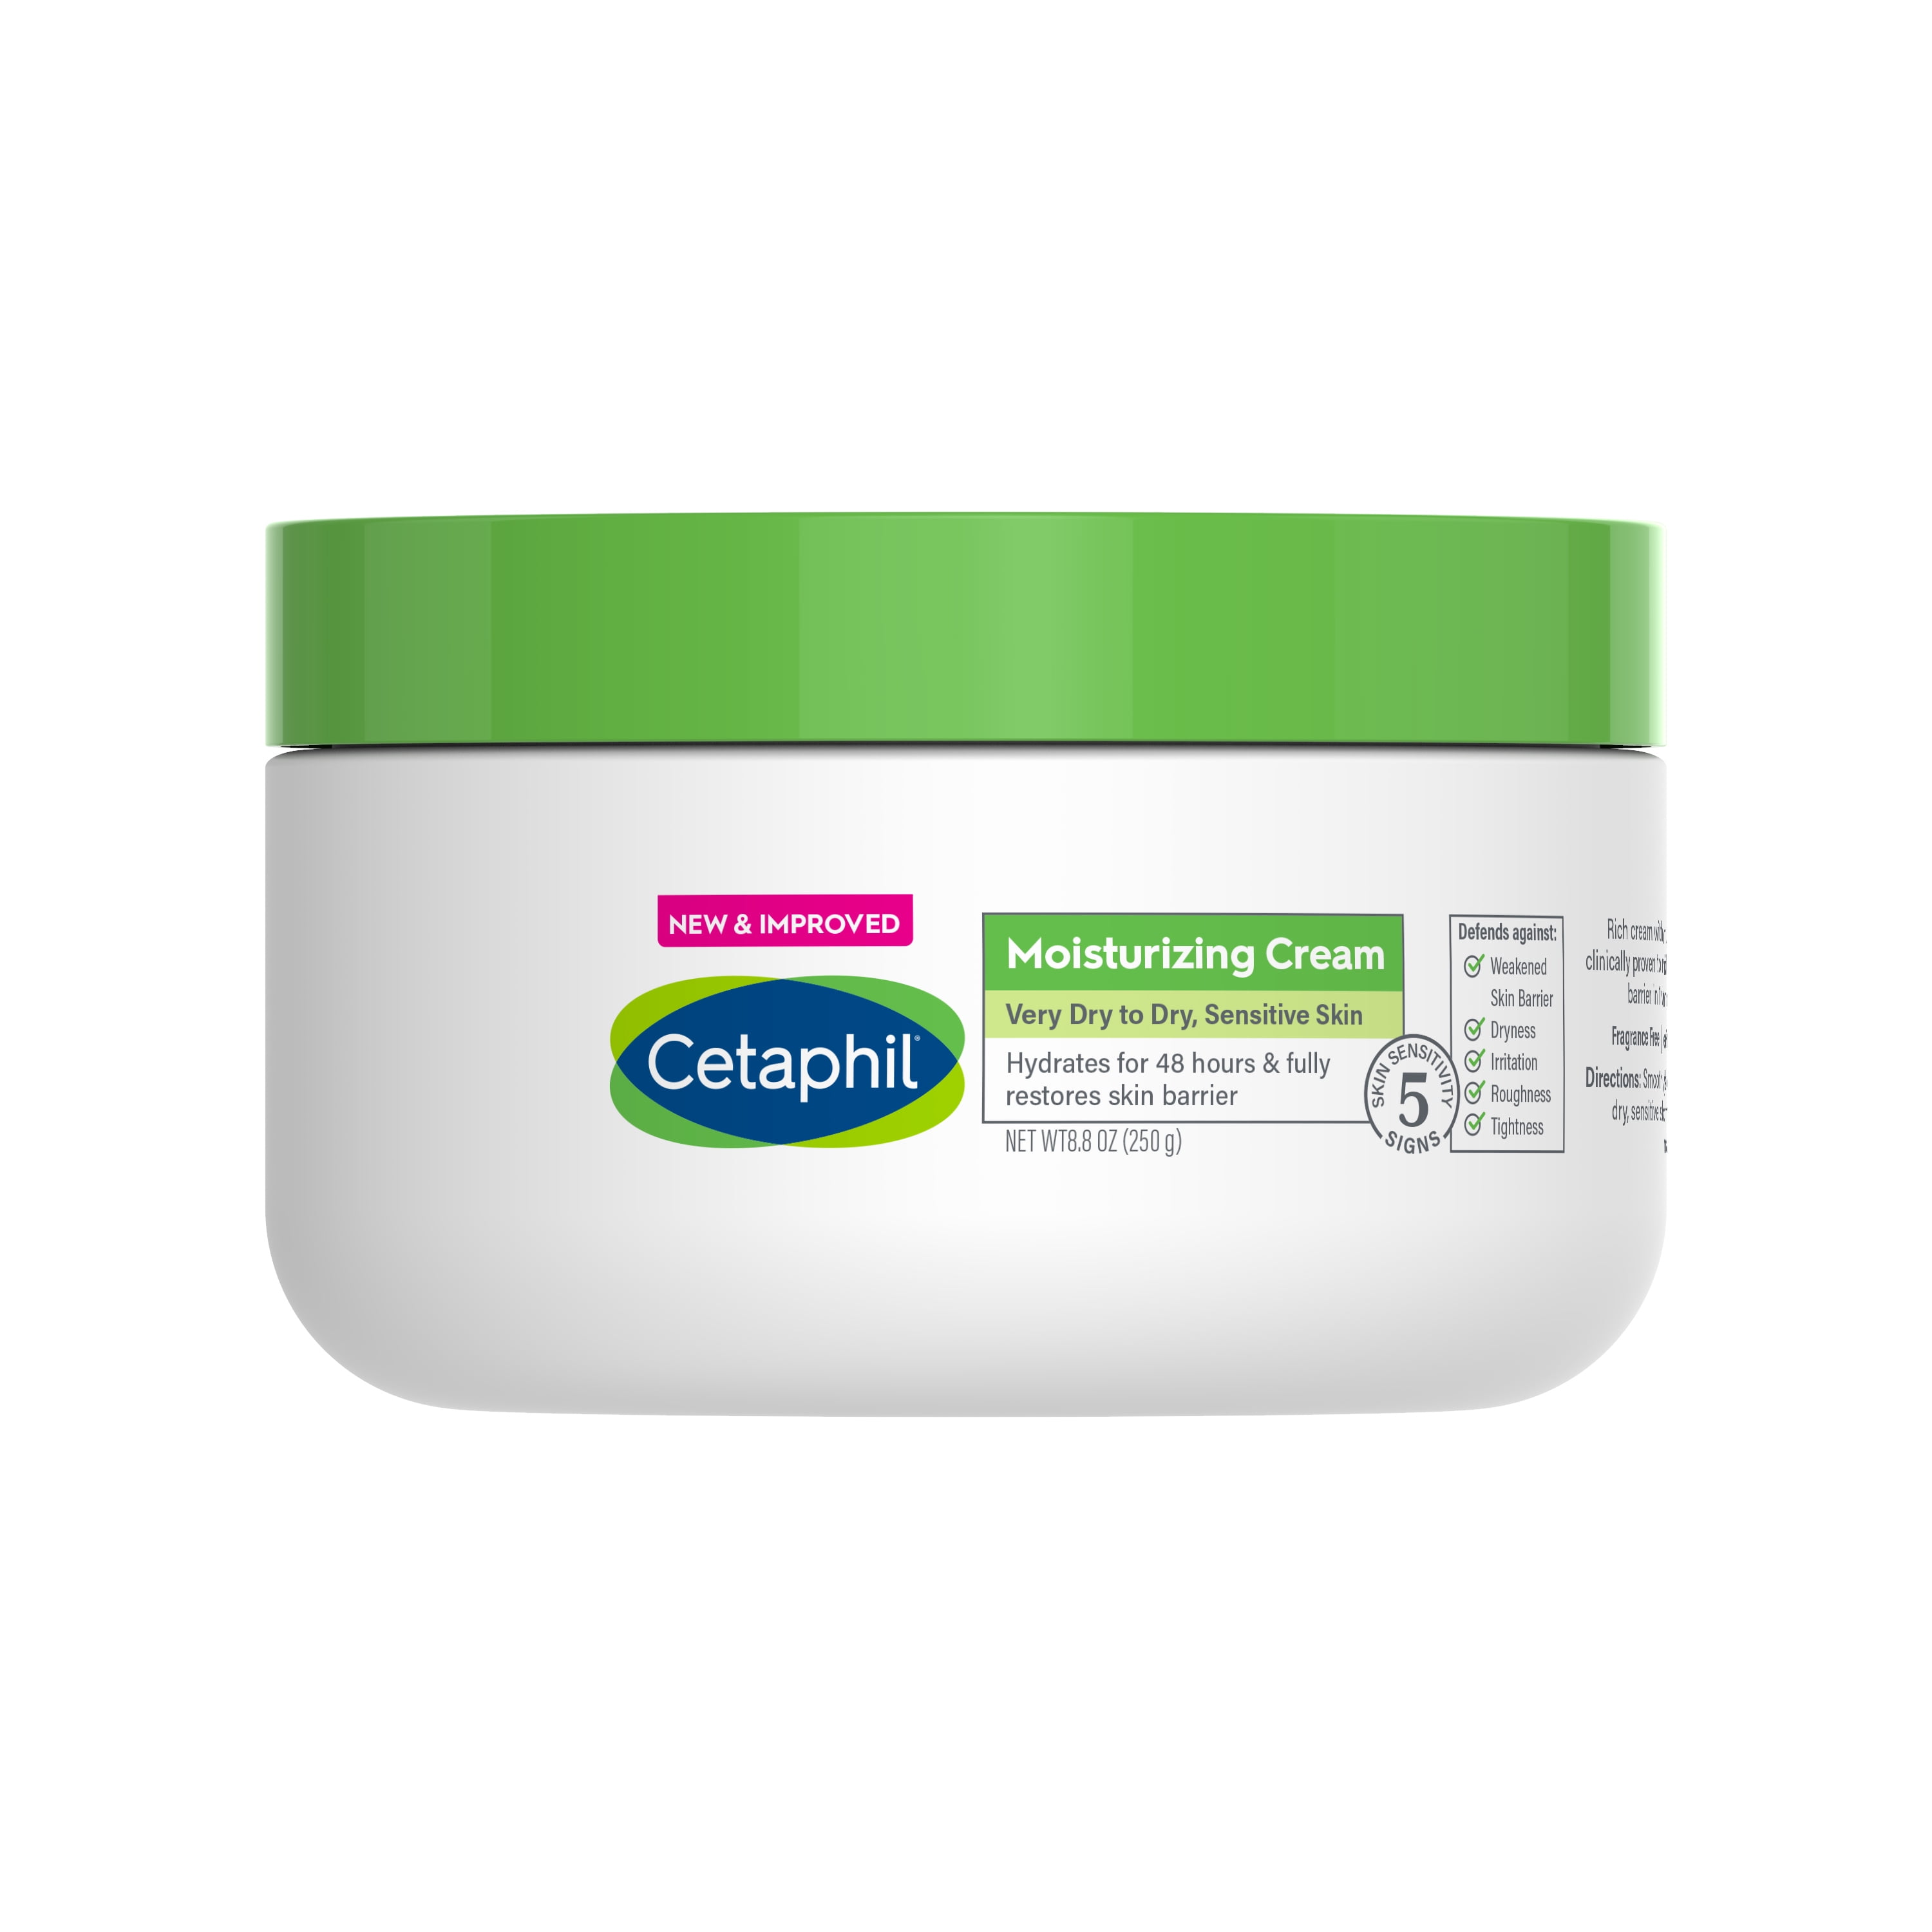 Cetaphil Moisturizing Cream, Body Moisturizer, Hydrating Moisturizing Cream Dry to Very Dry, Sensitive Skin, Fragrance Non-Comedogenic, Non-Greasy, Walmart.com